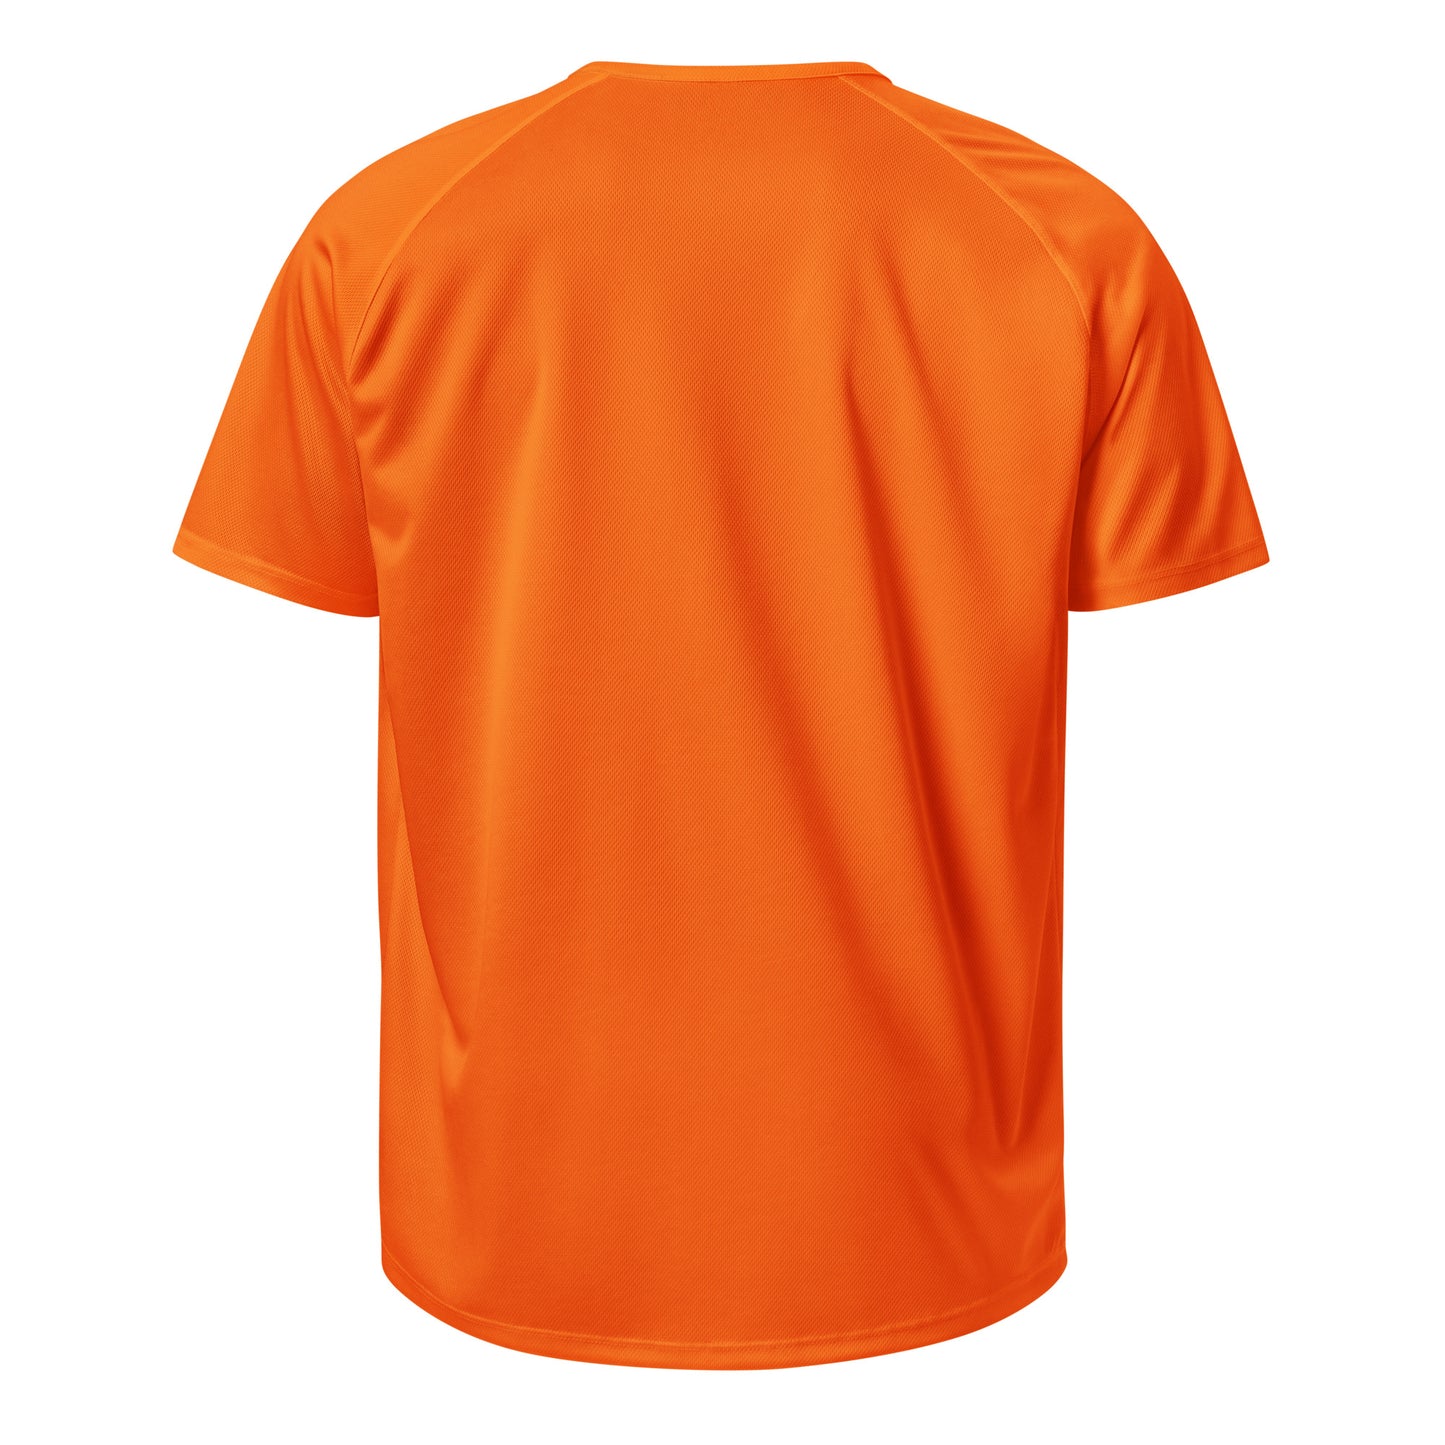 Unisex sports t-shirt